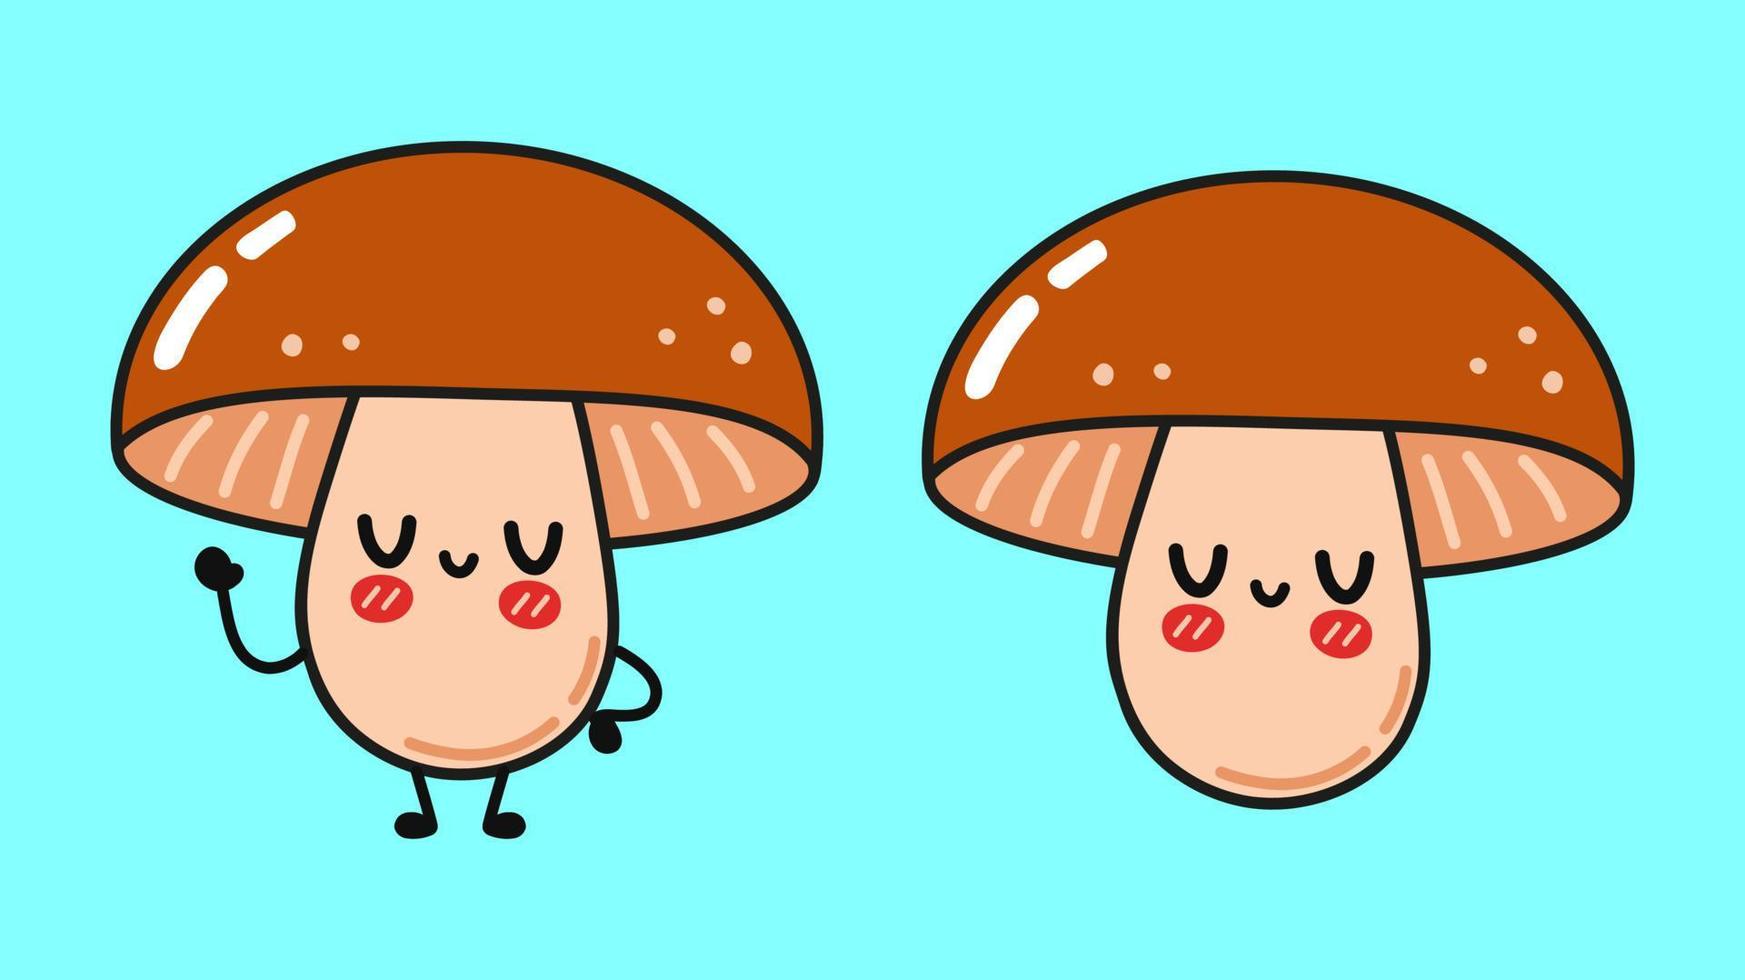 Funny cute happy Mushroom characters bundle set. Vector kawaii line cartoon style illustration.